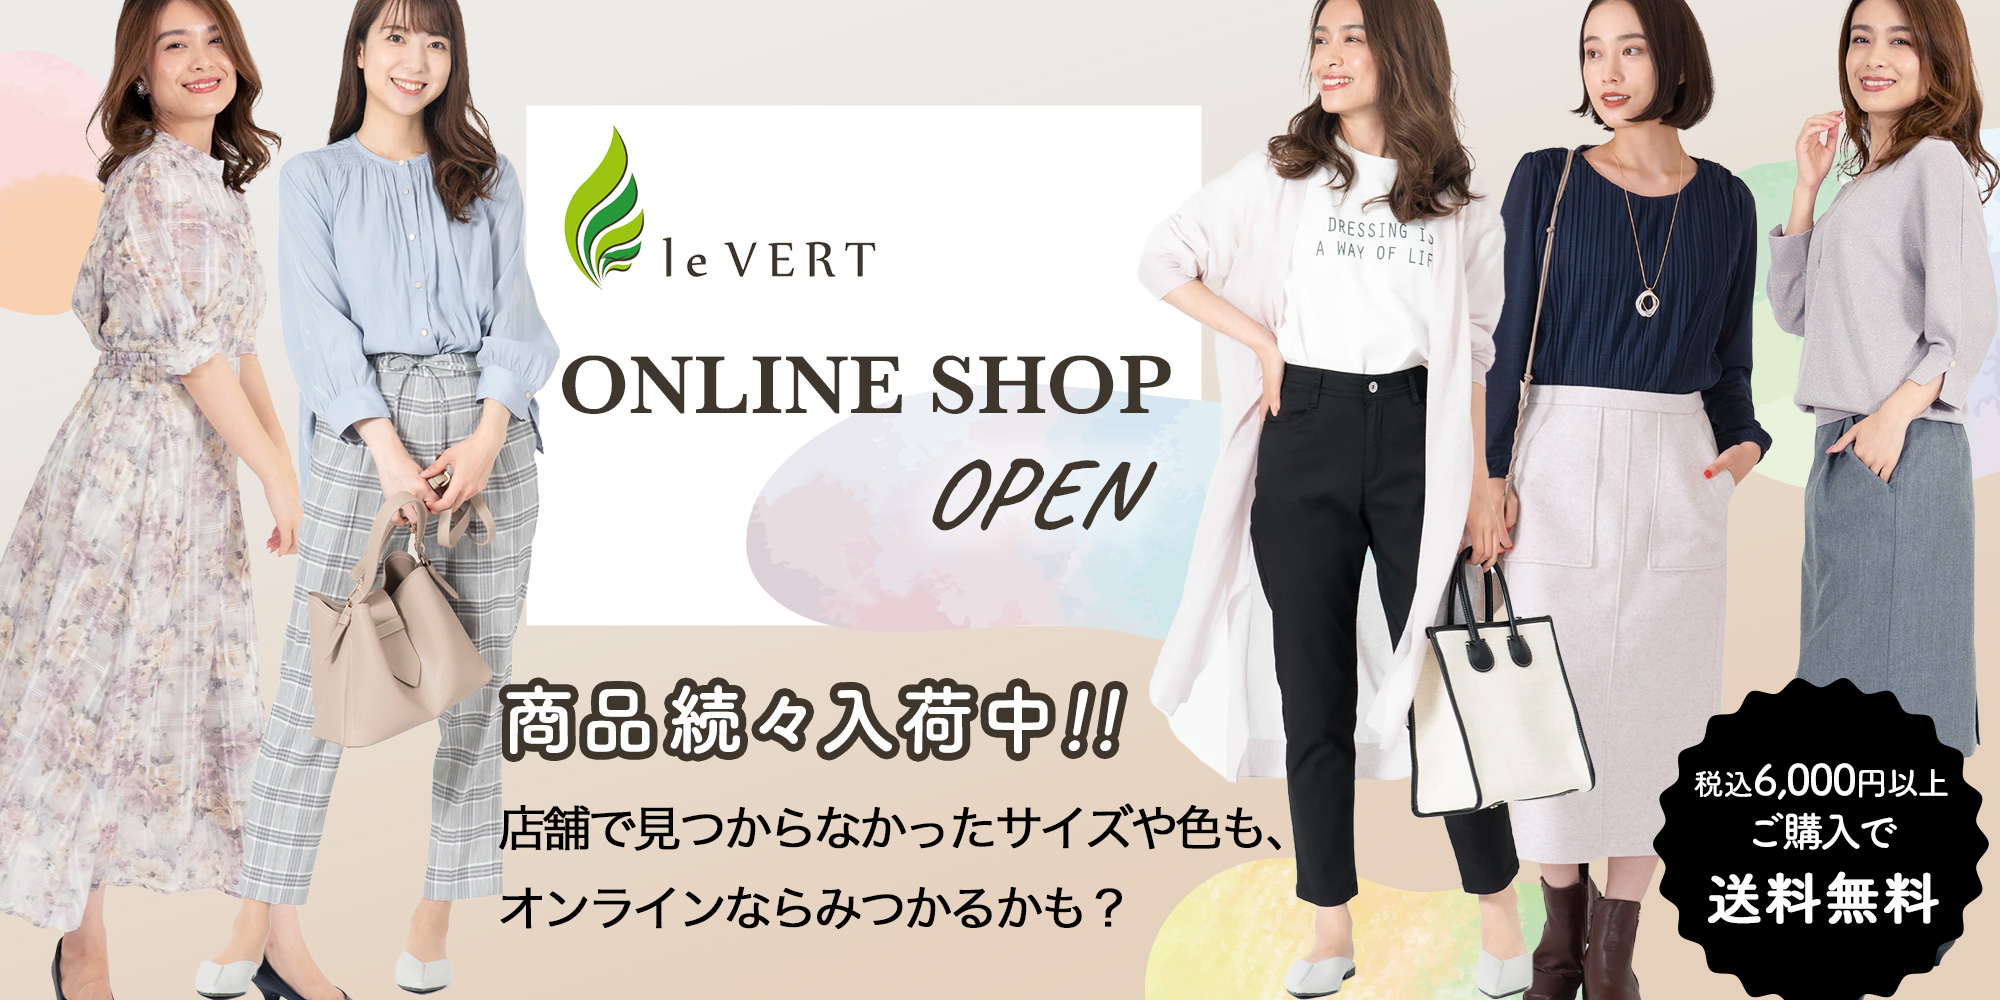 LeVERT Official Online Shop